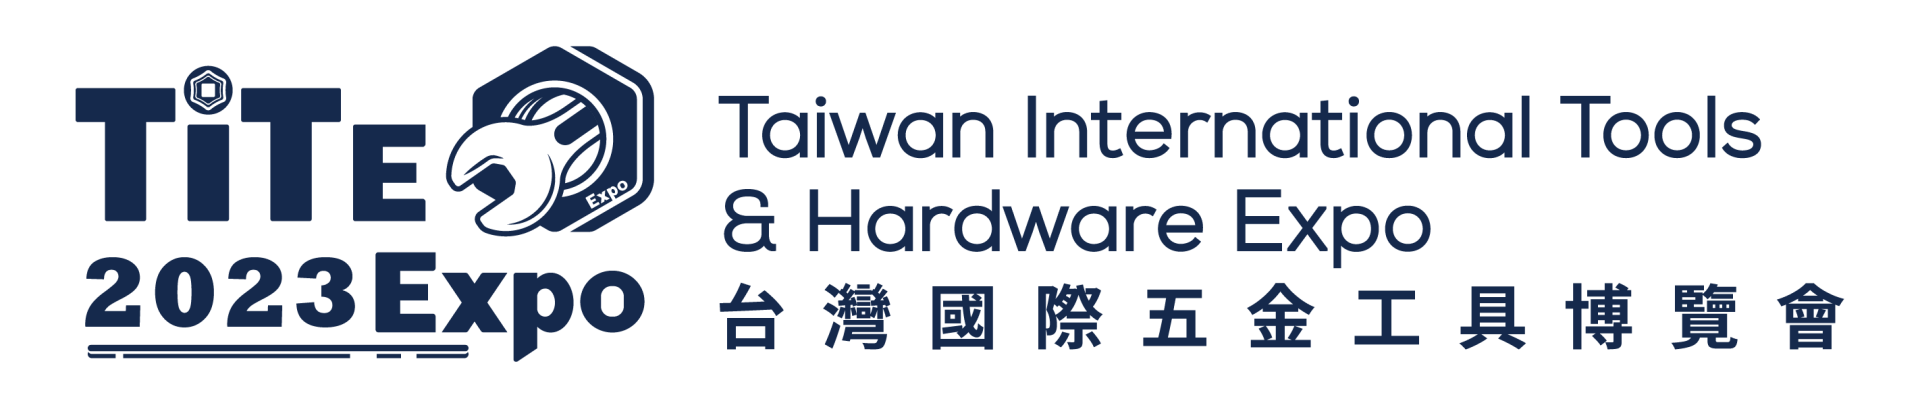 2023 Taiwan International Tools & Hardware EXPO | Topist Enterprise